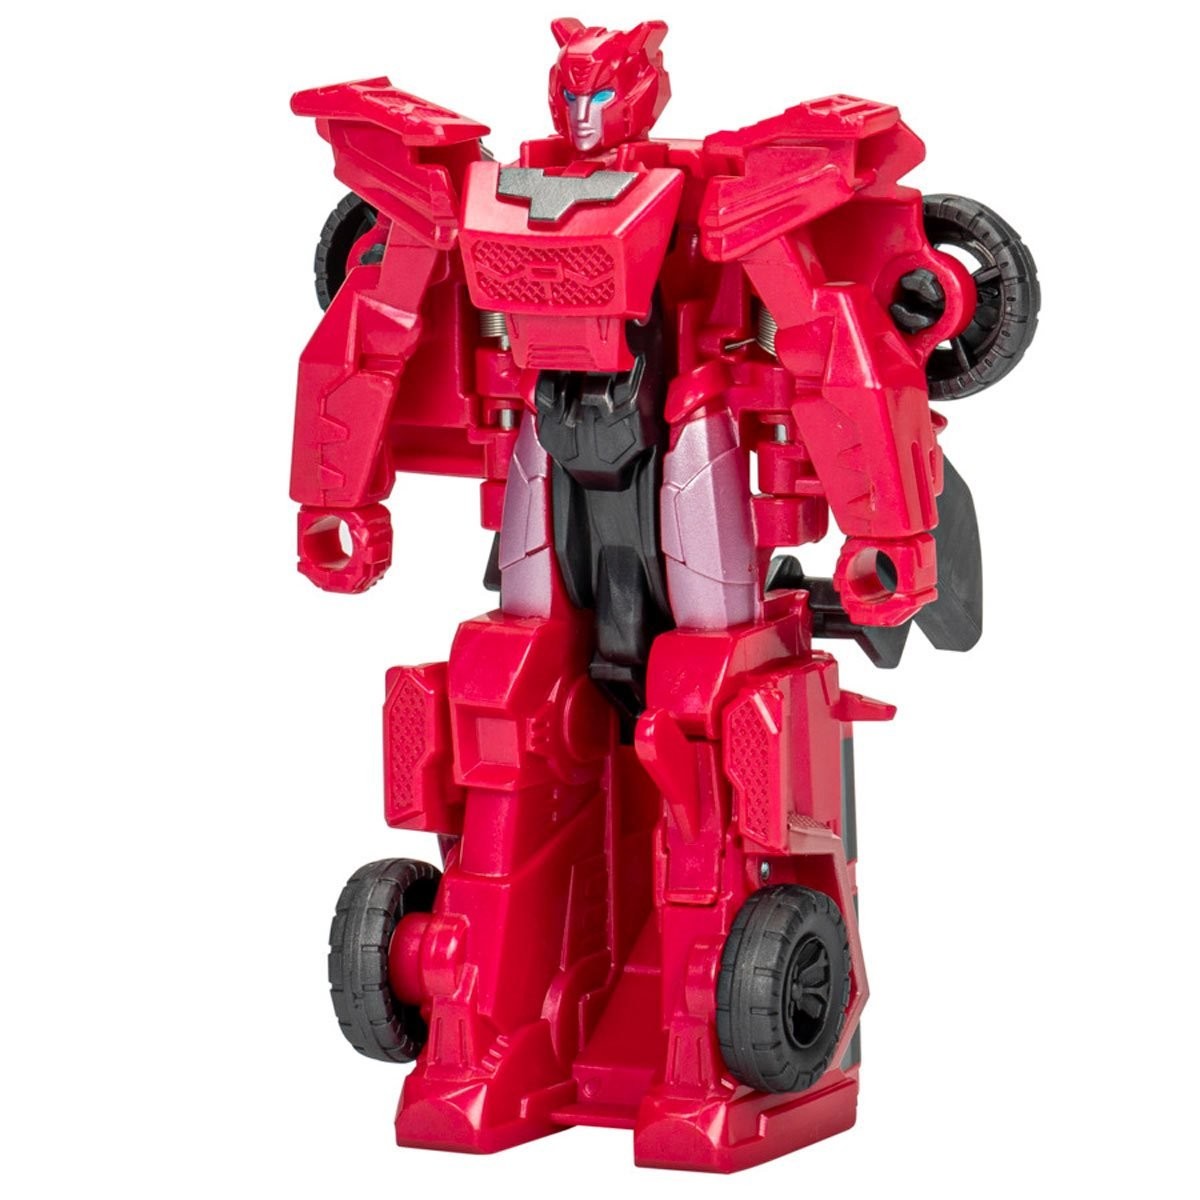 Transformers News: First Look at New Earthspark Toys Including Skullcruncher